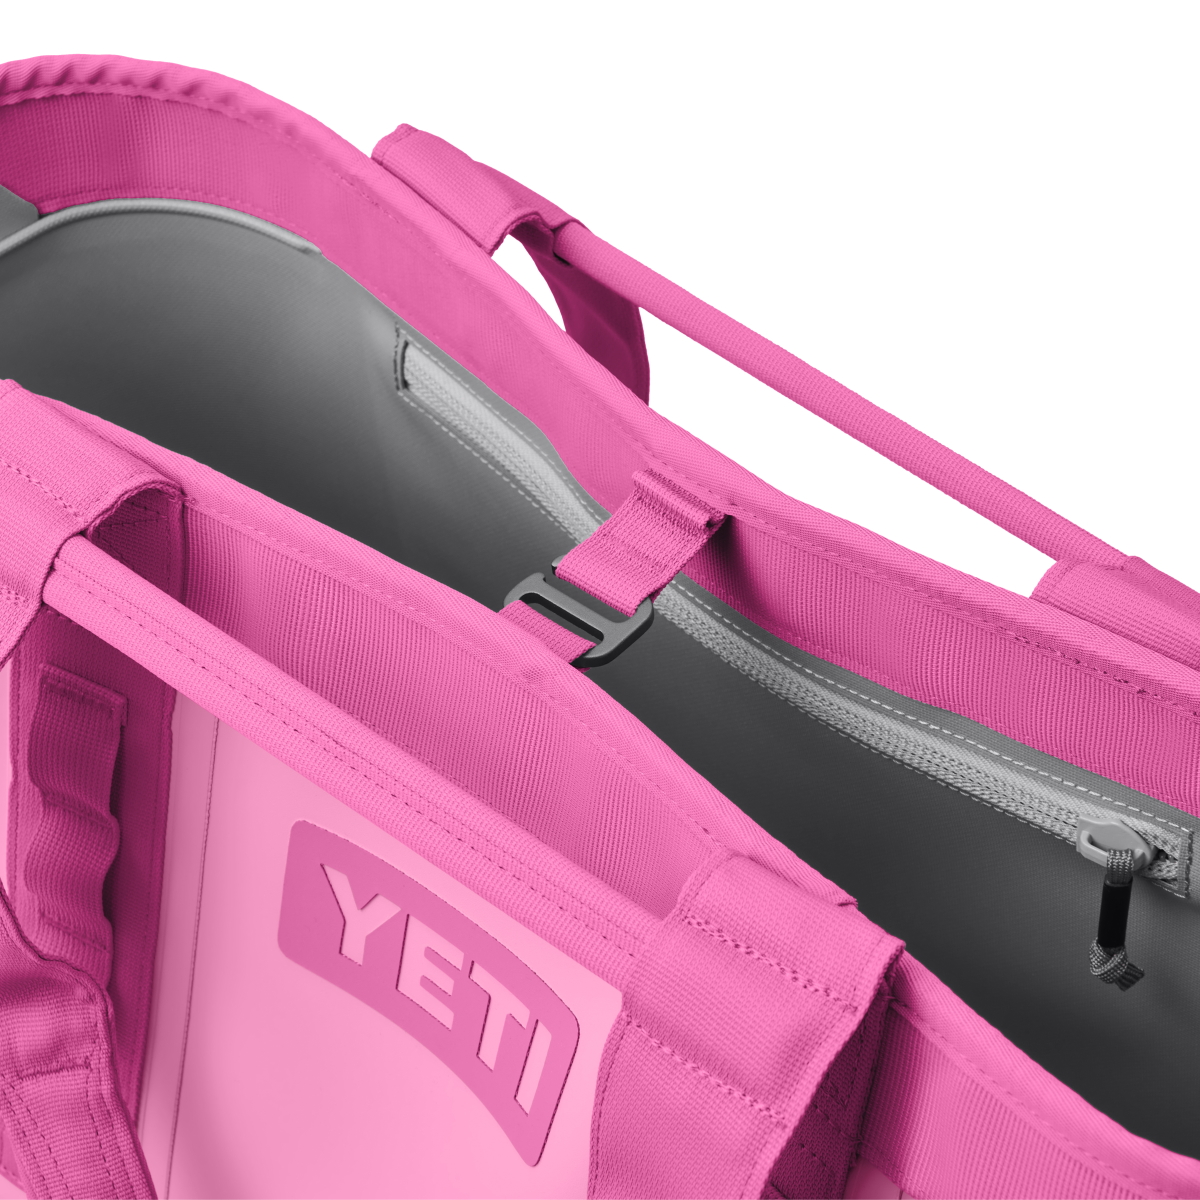 YETI Camino Carryall 35 Power Pink Tote - Ace Hardware